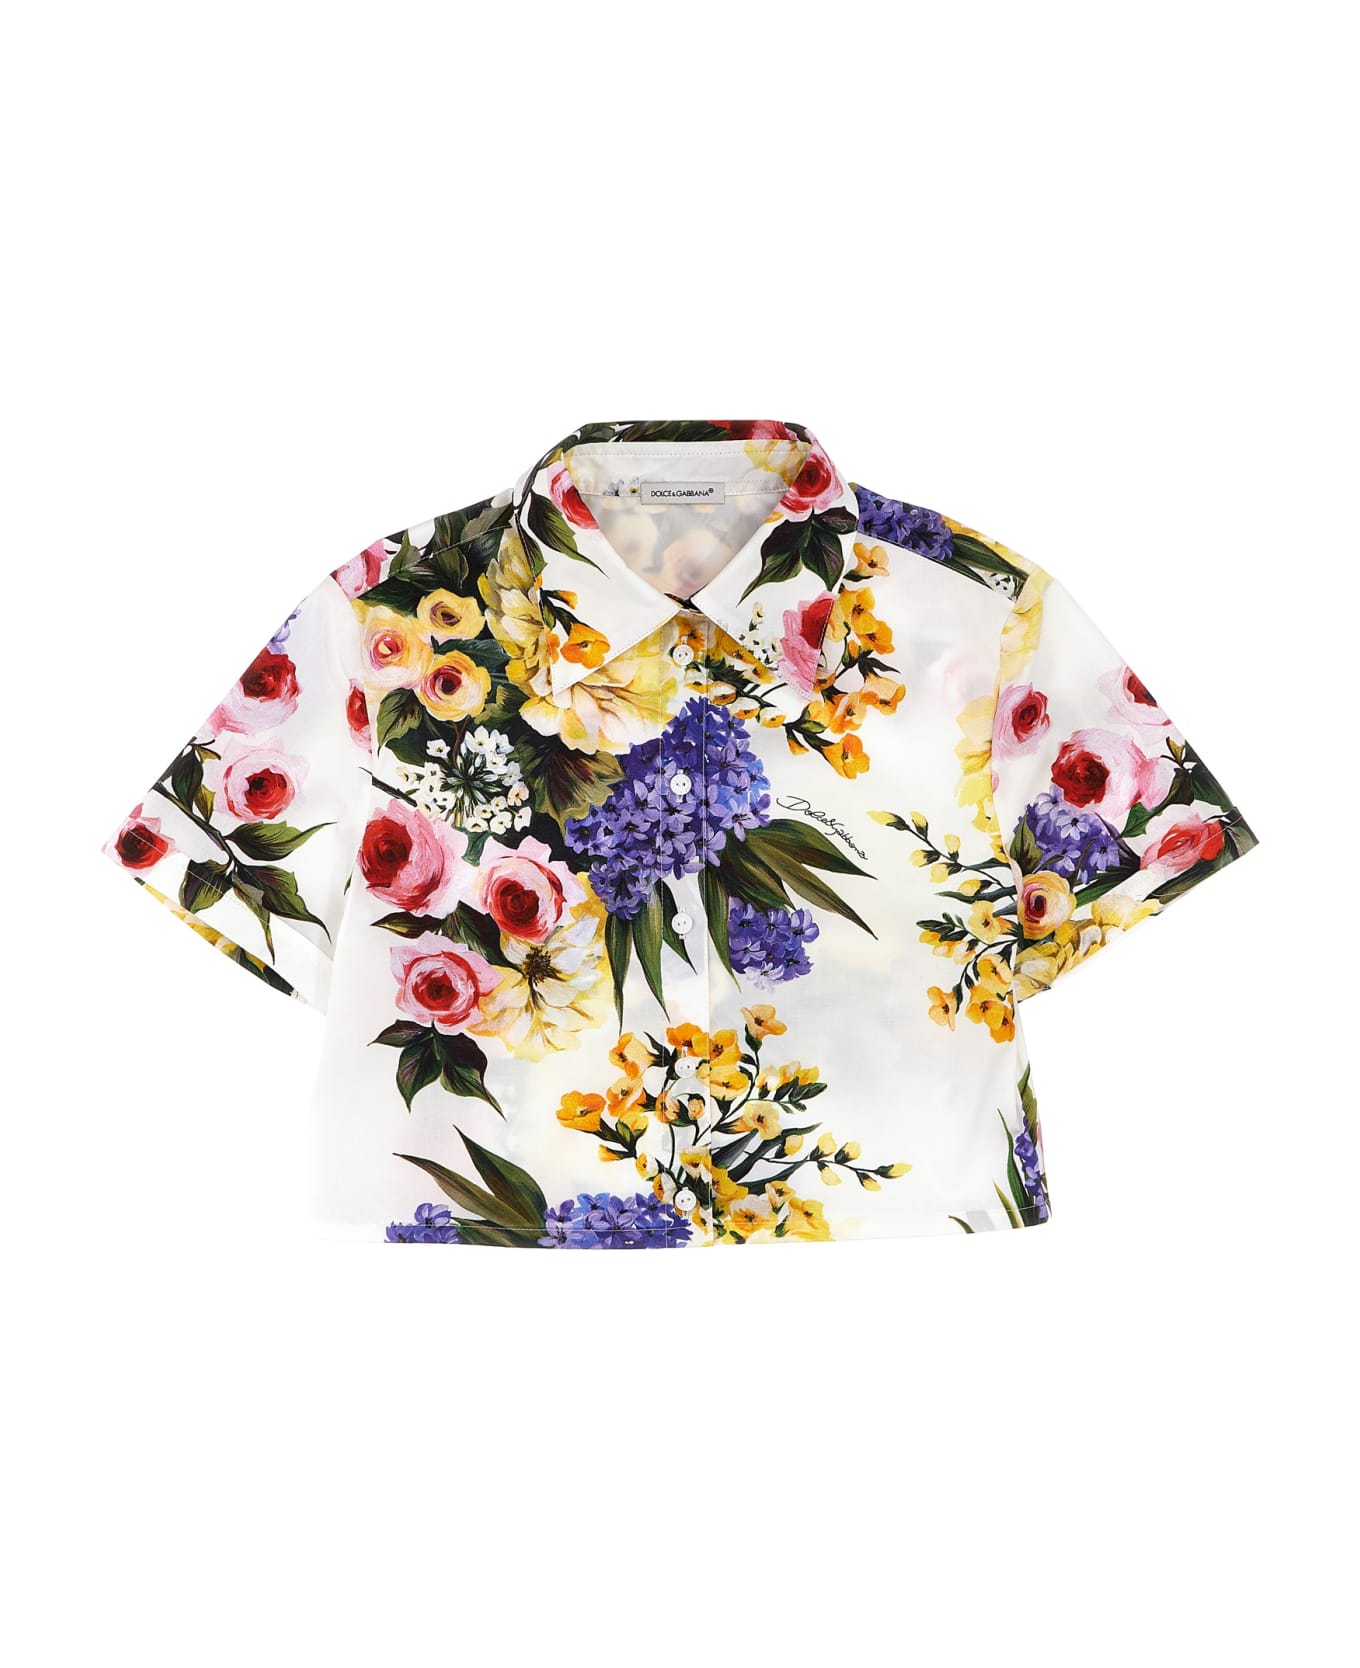 Dolce & Gabbana 'giardino' Shirt - Multicolor